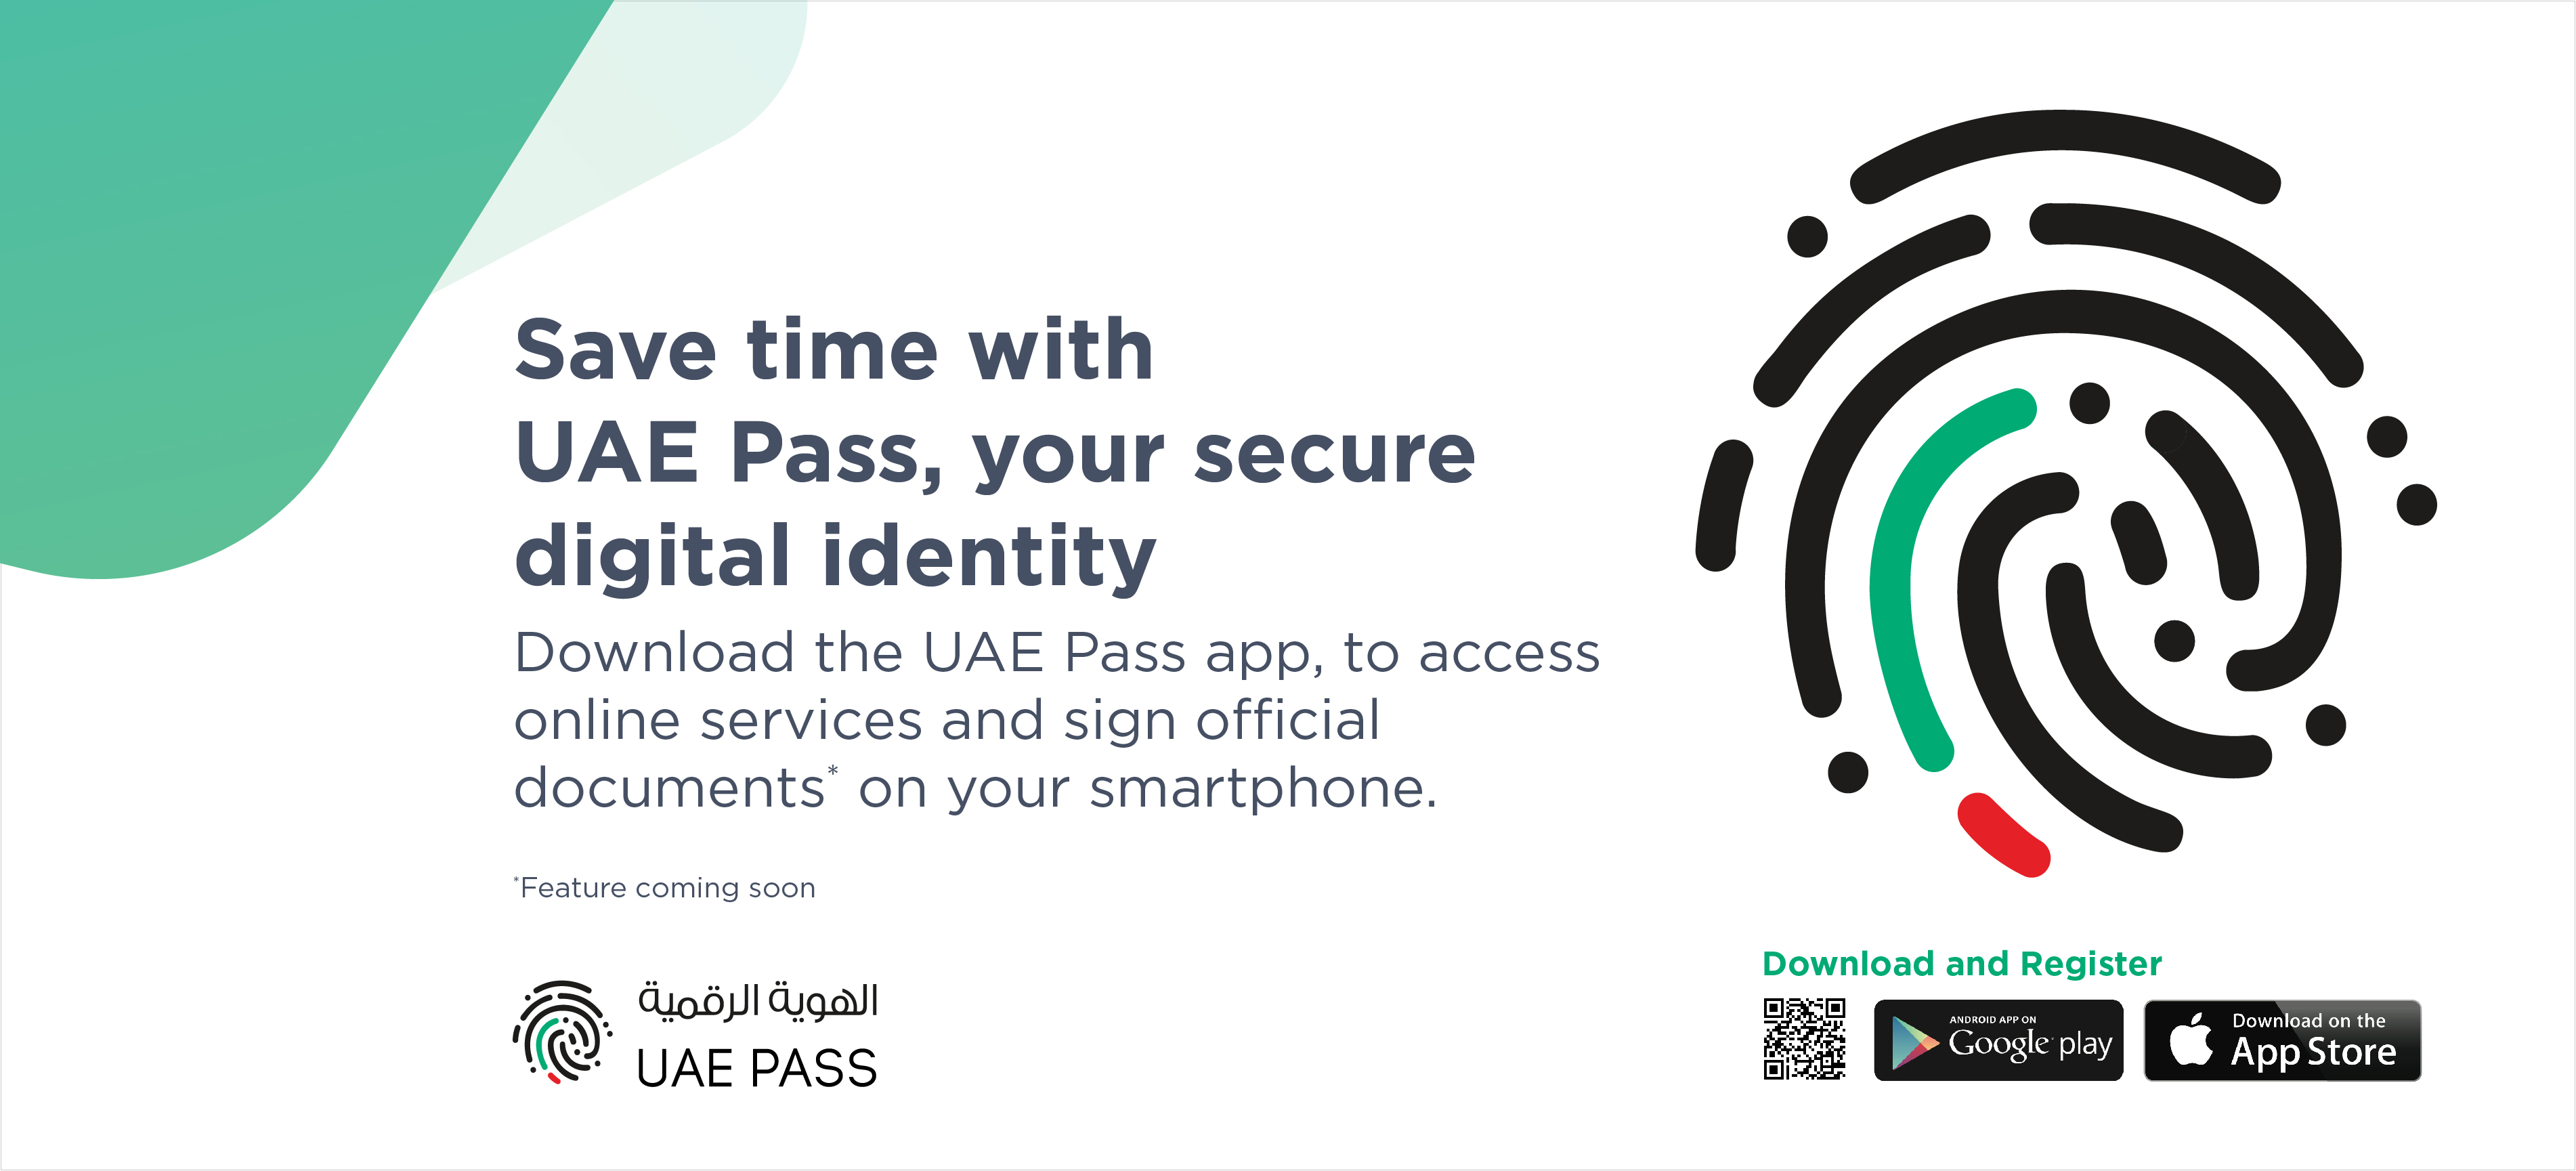 Uae service. UAE Pass. Приложении UAE Pass. Дубай приложение UAE Pass. UAE Pass logo.